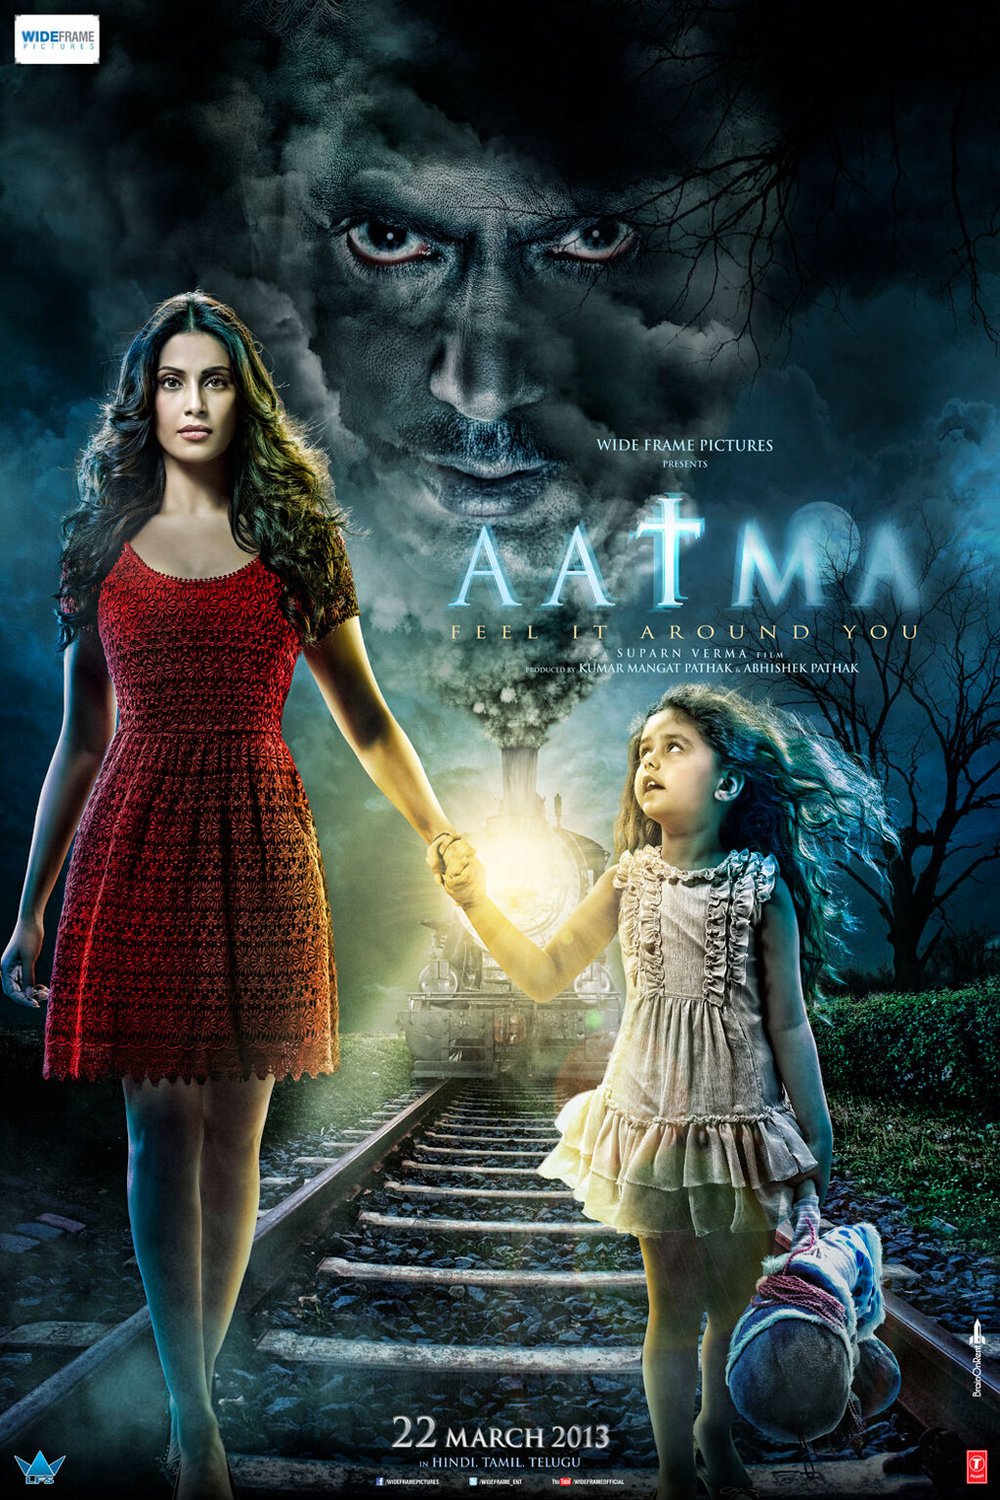 Hindi poster of the movie Aatma